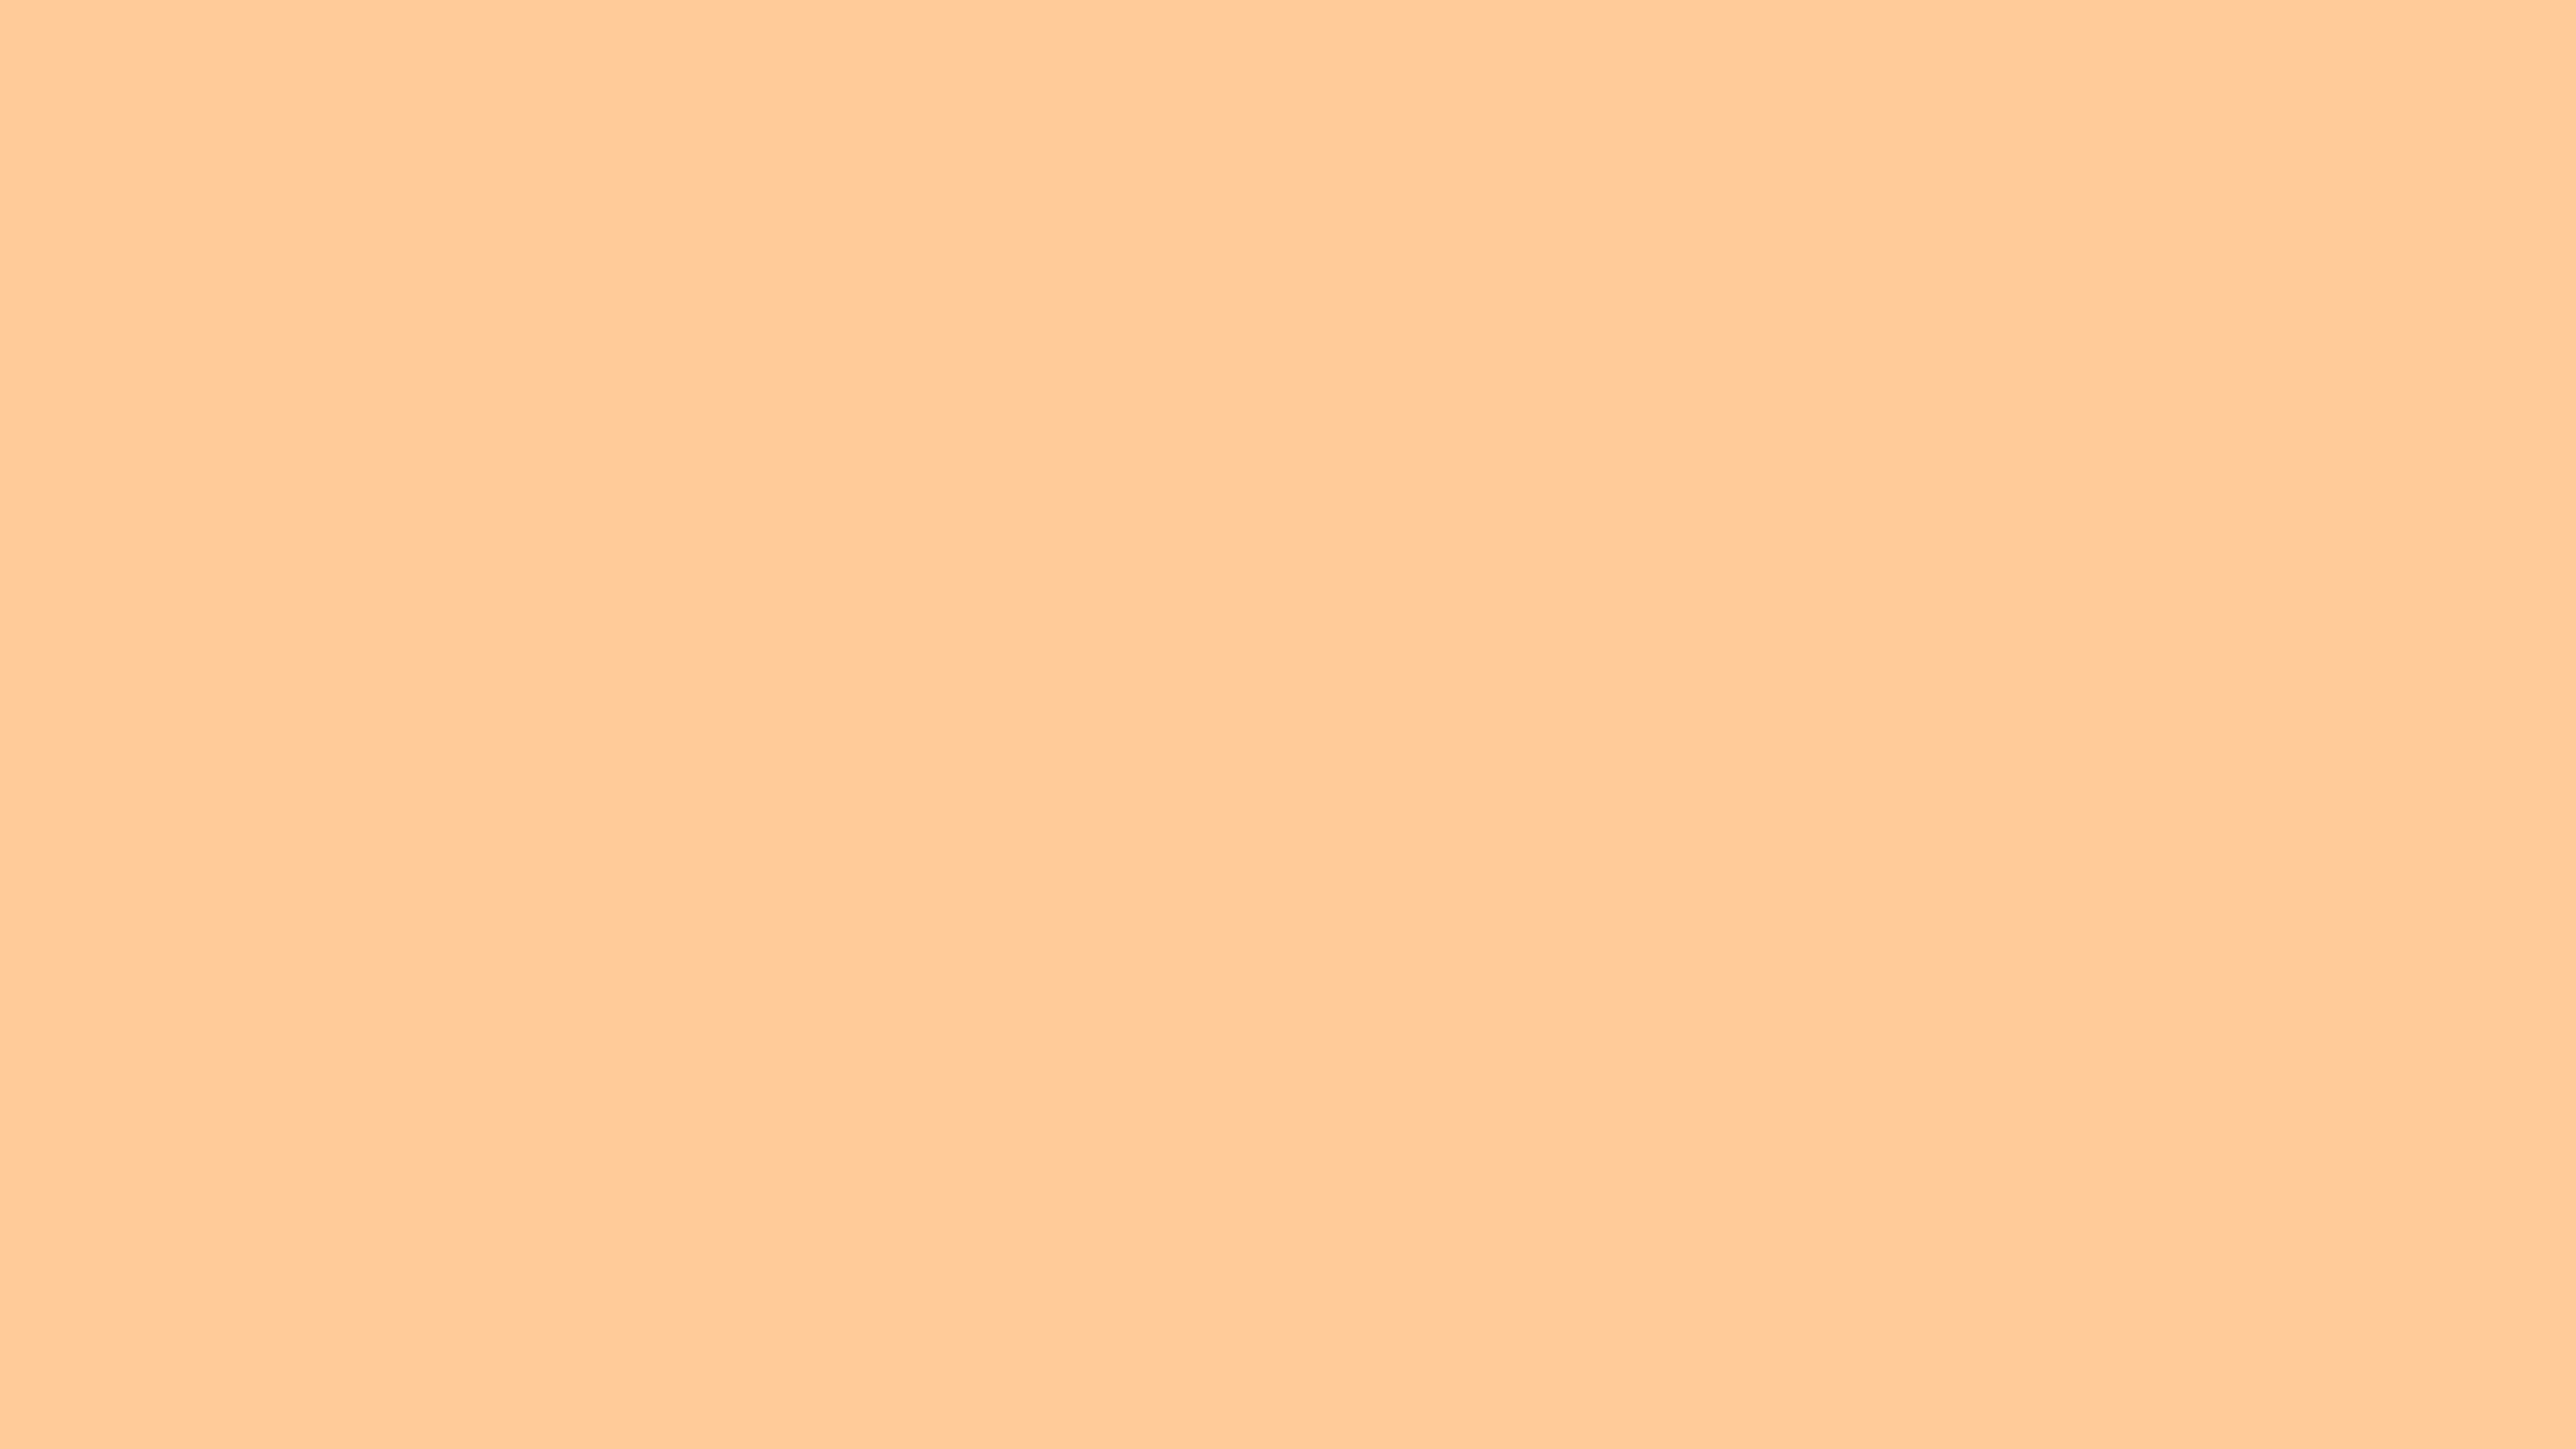 Plain Orange Background Orange Wallpaper Stock Image  Image of background  paper 144750329